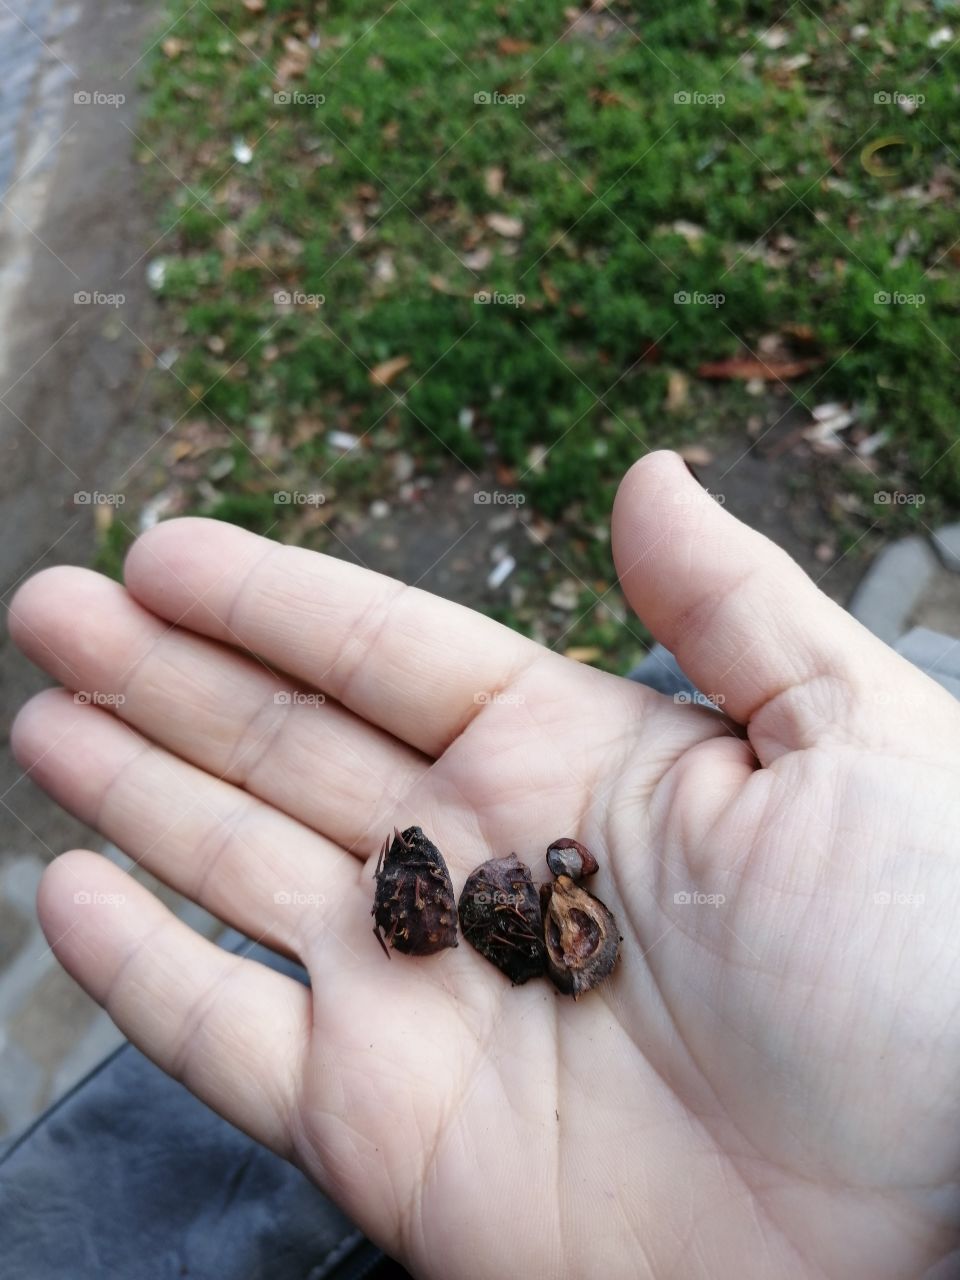 A little nutty